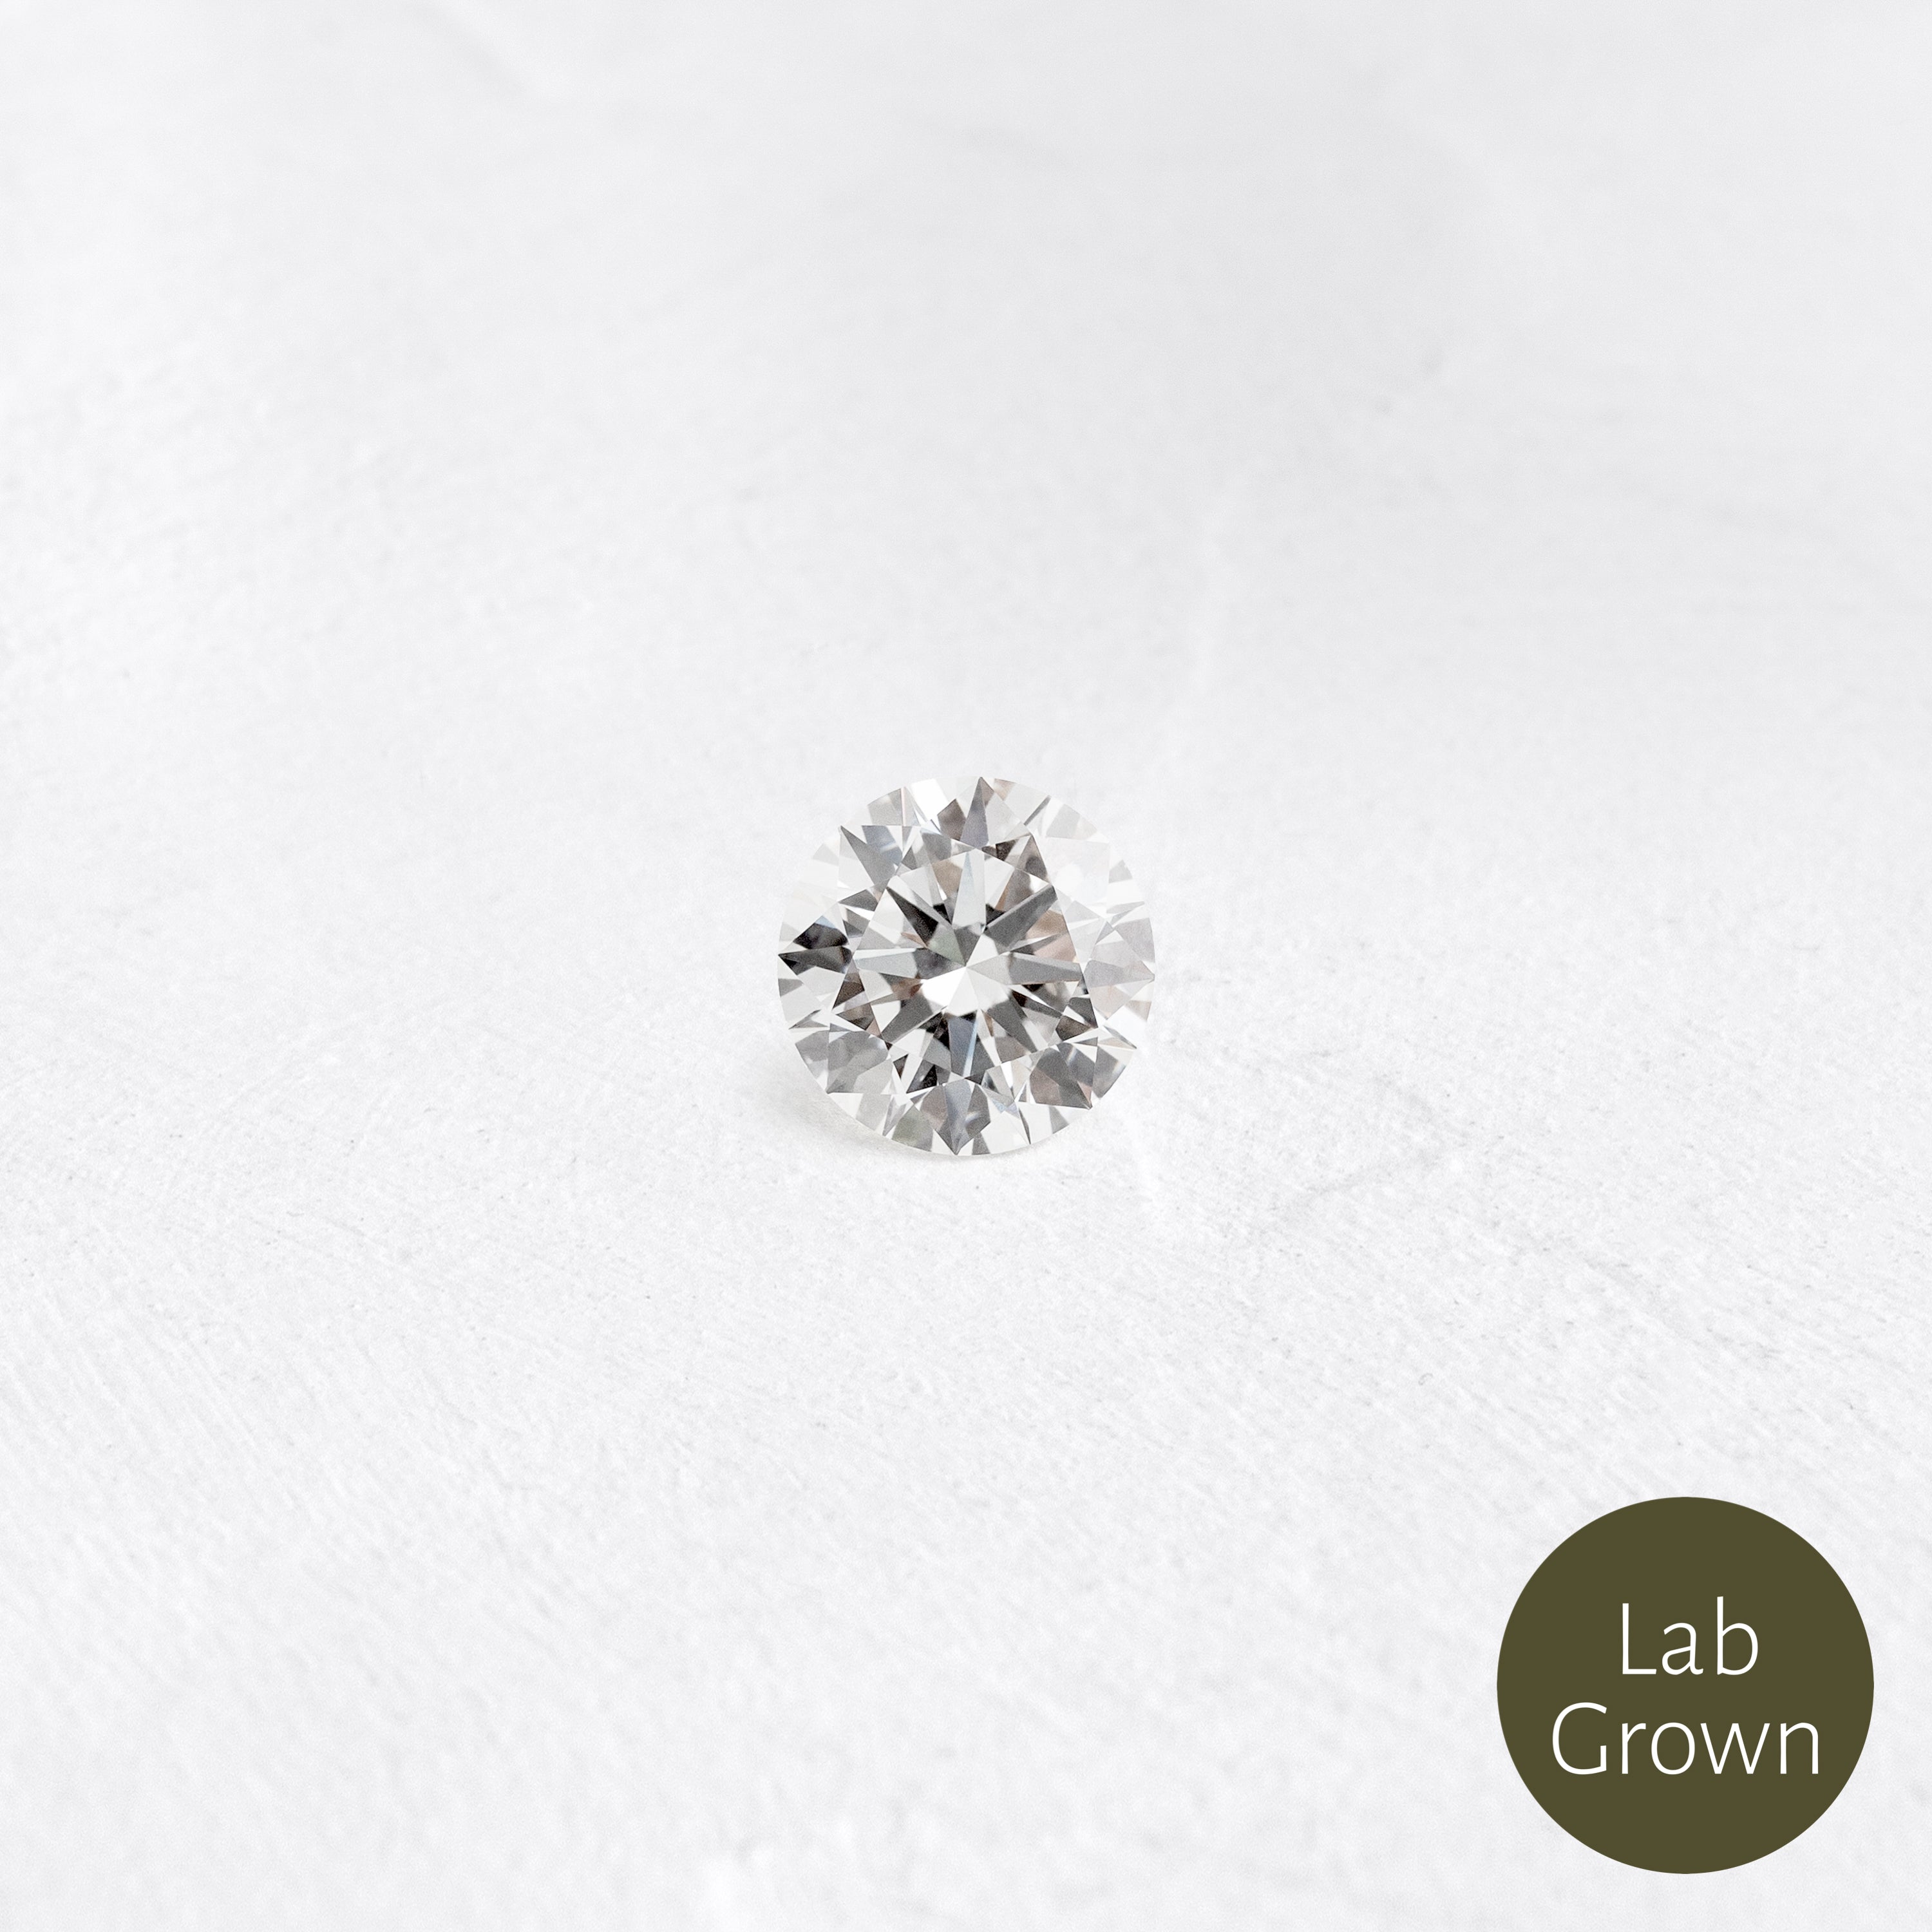 Choose Your Design - 1.5ct Round Lab-Grown Diamond, VS1/G, SKU 89269